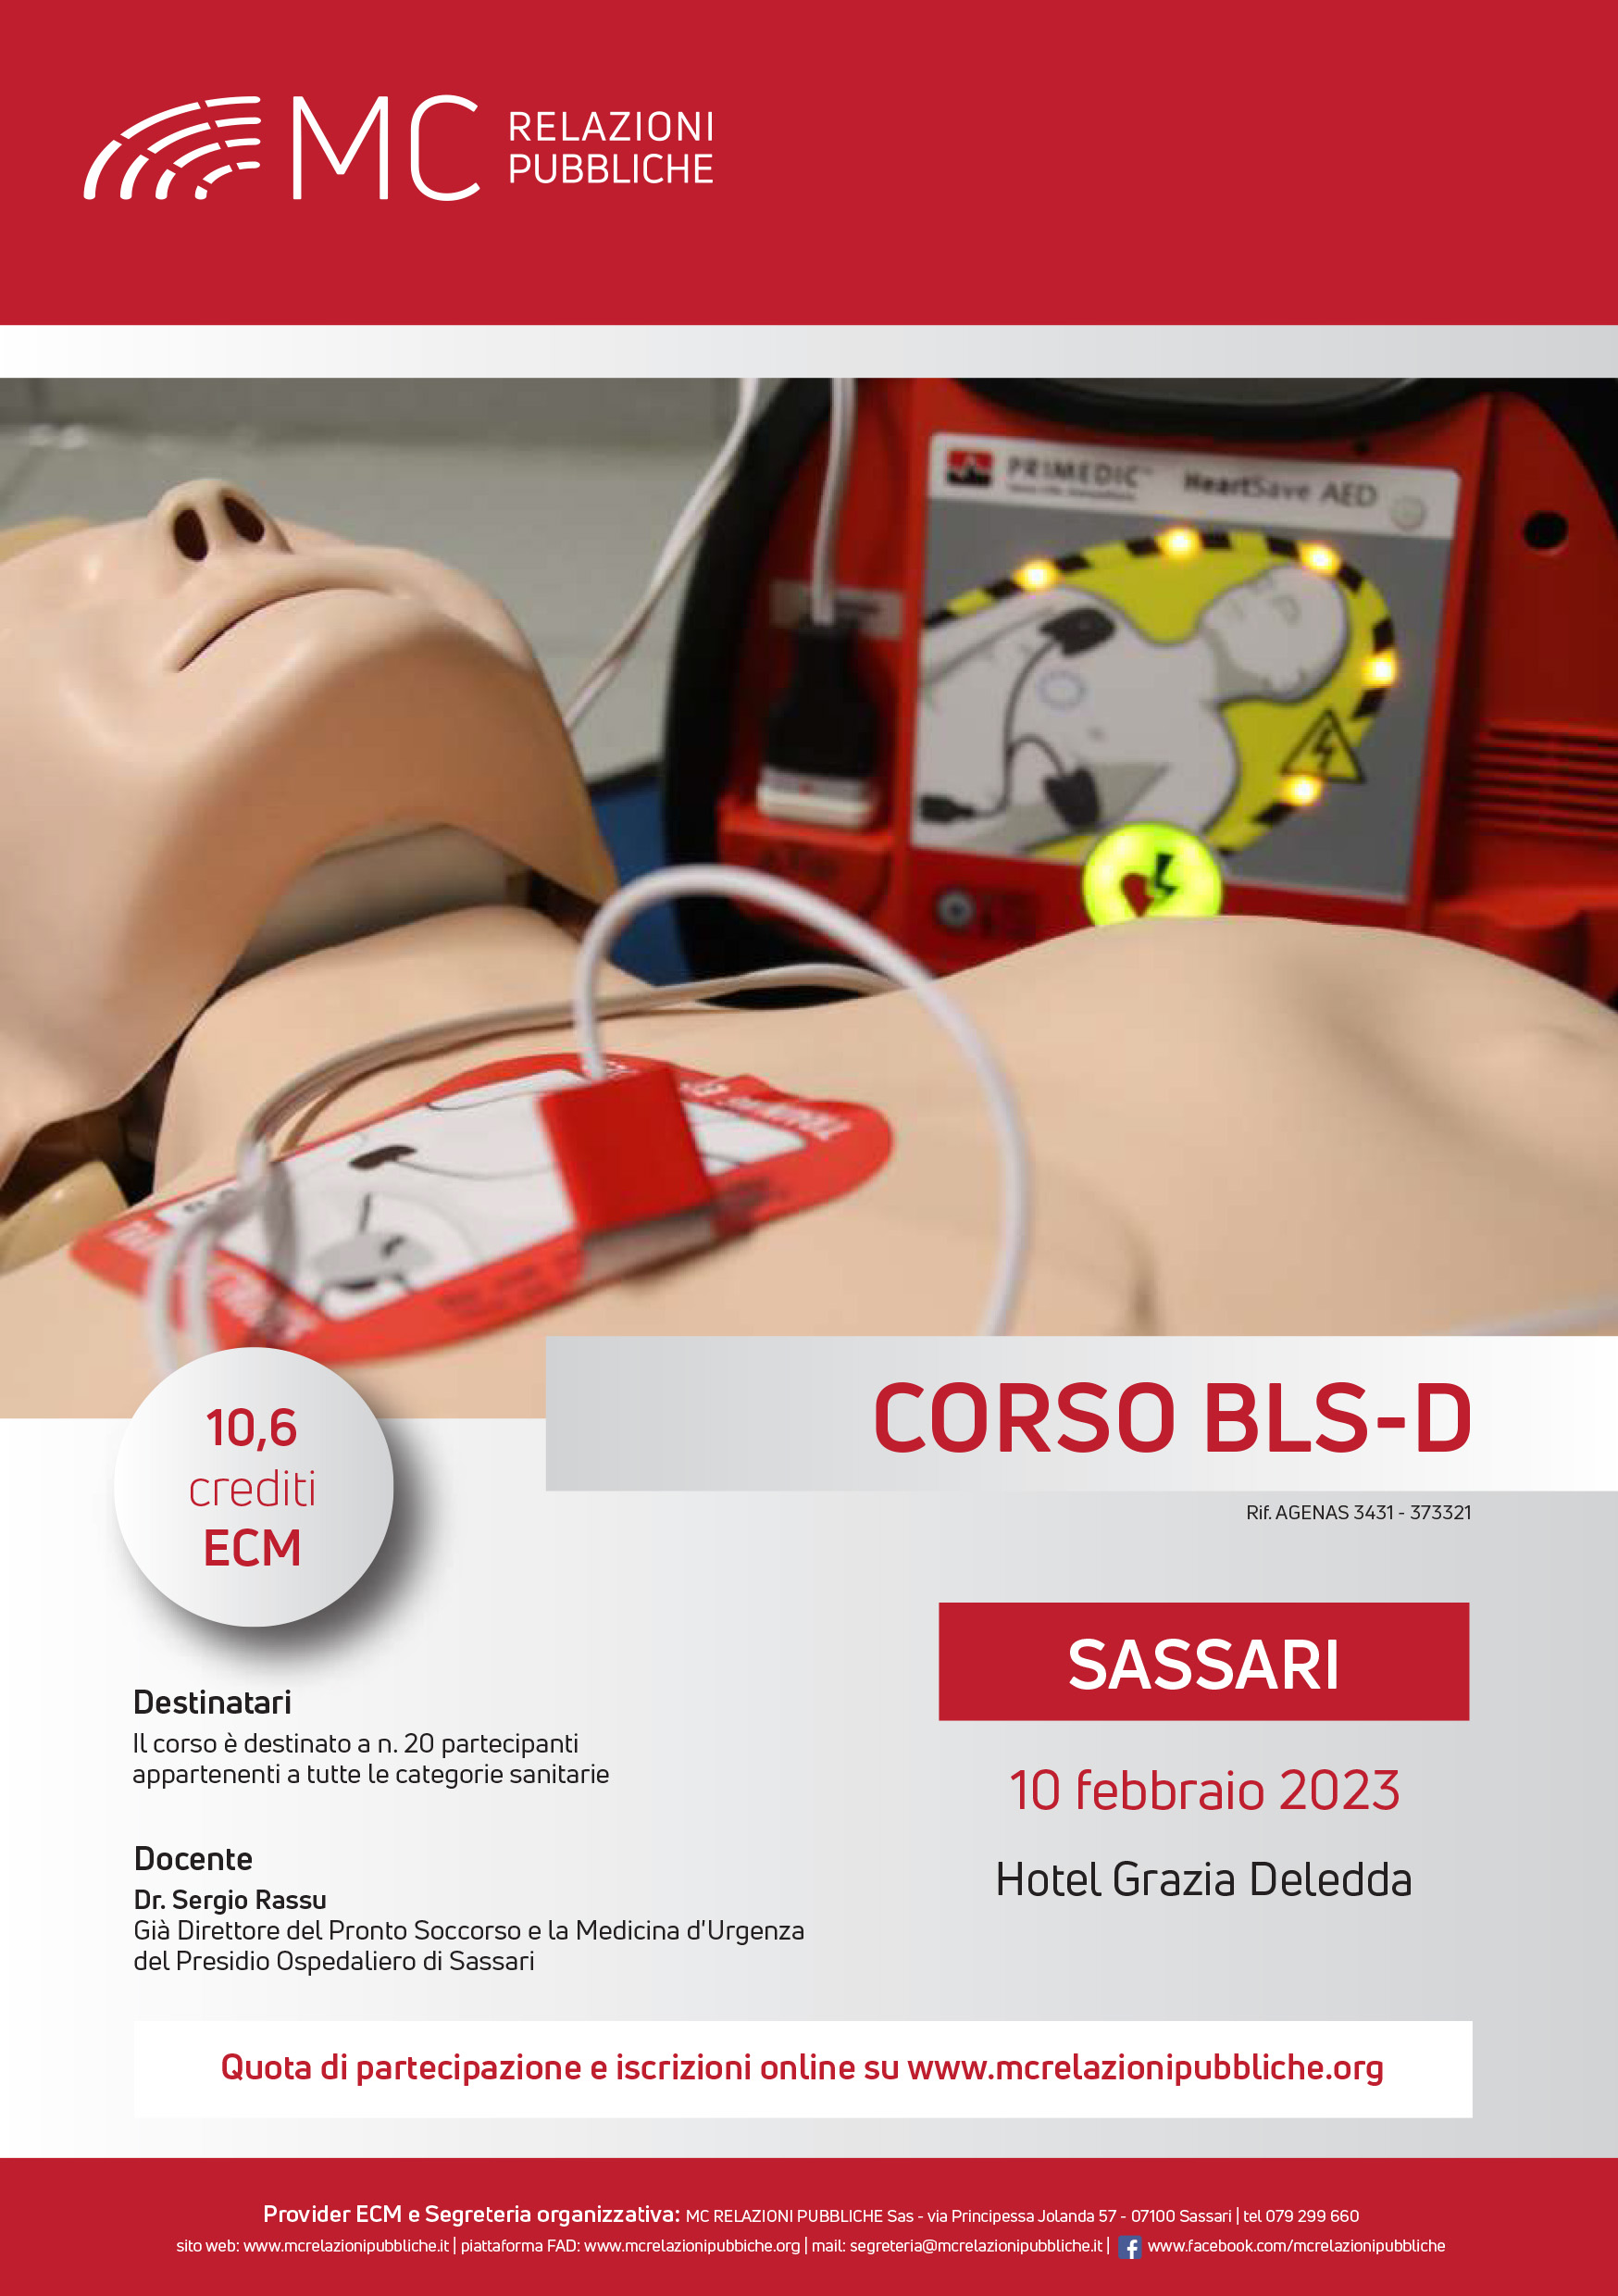 Corso BLS-D. Basic life support-defibrillation